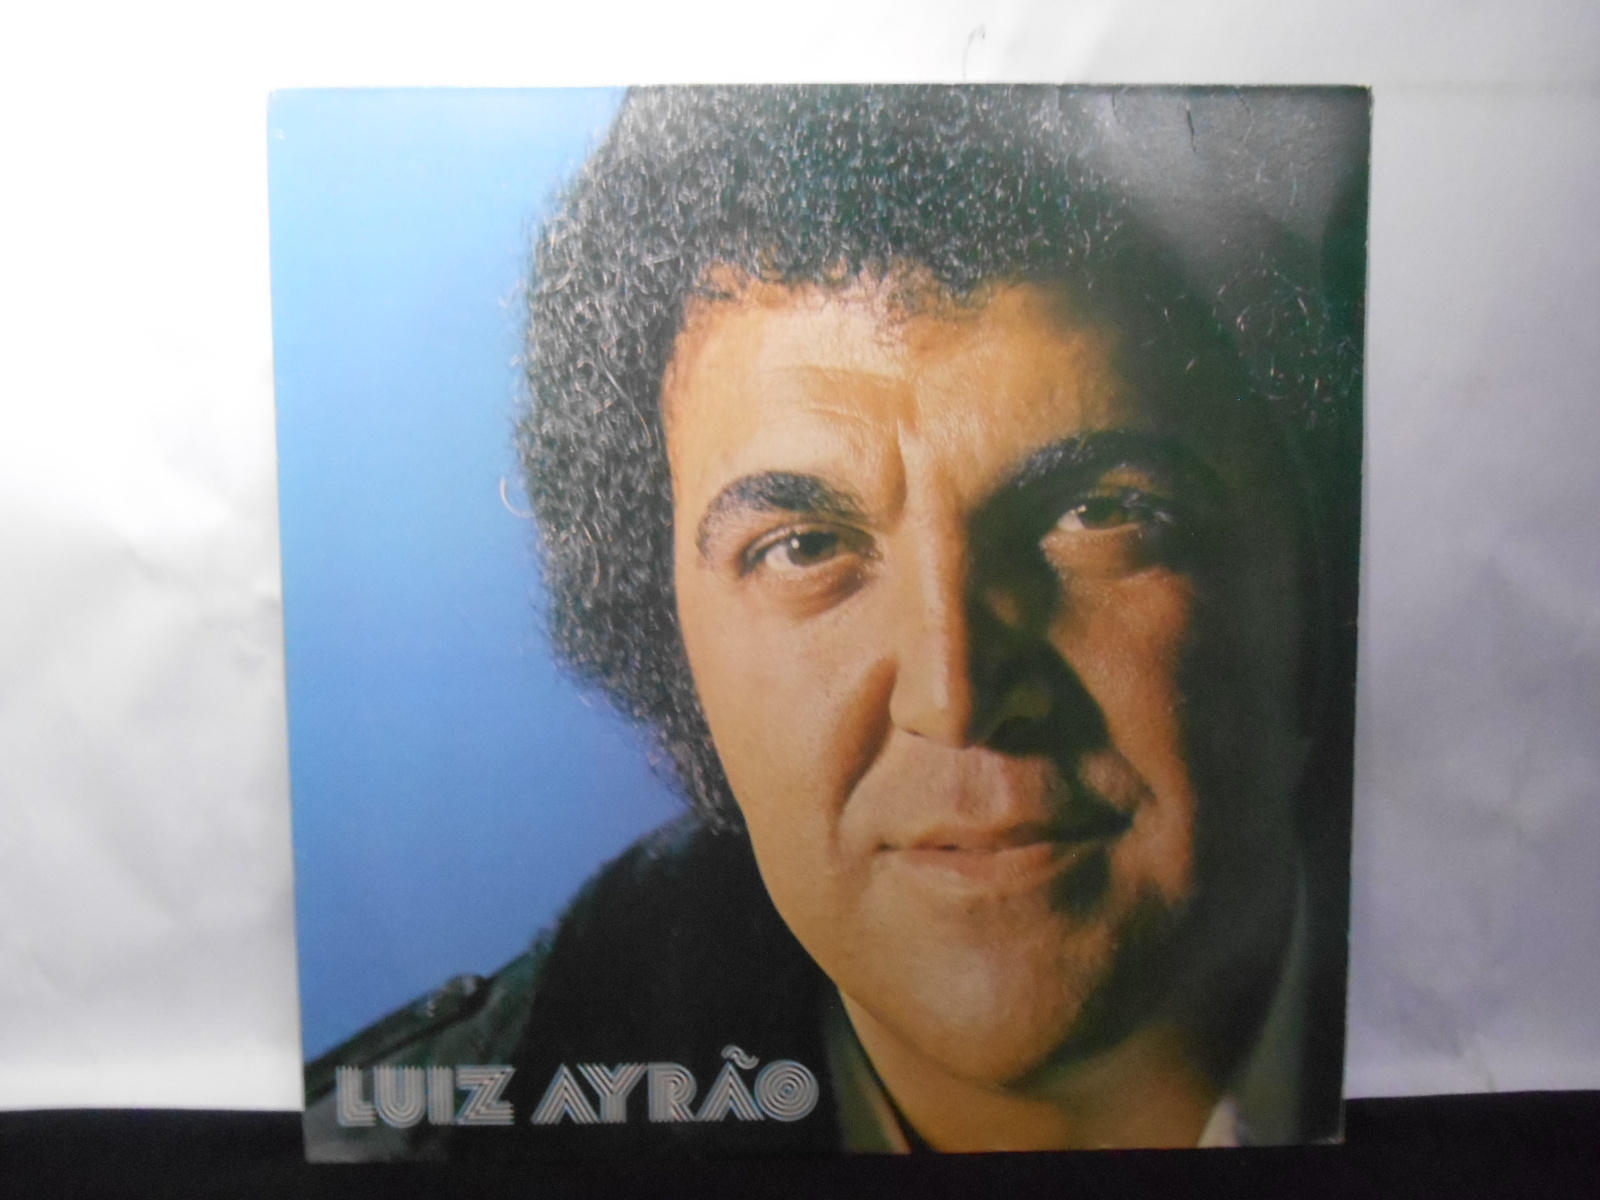 Vinil - Luiz Ayrão - 1977